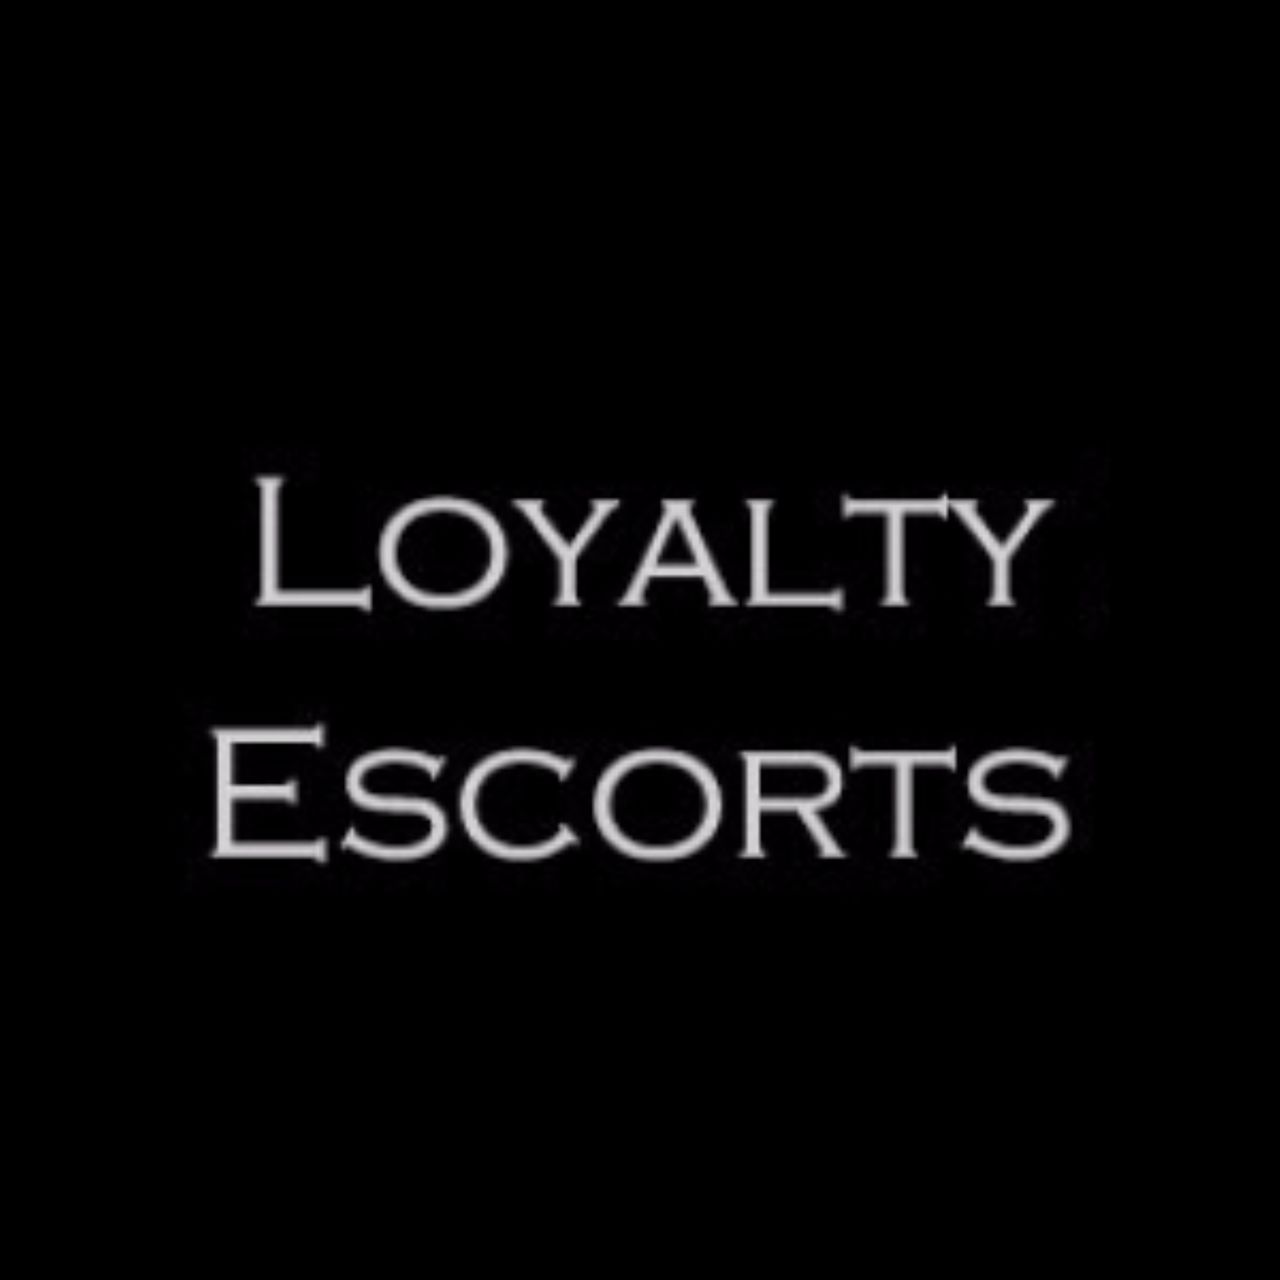 Loyalty Escorts